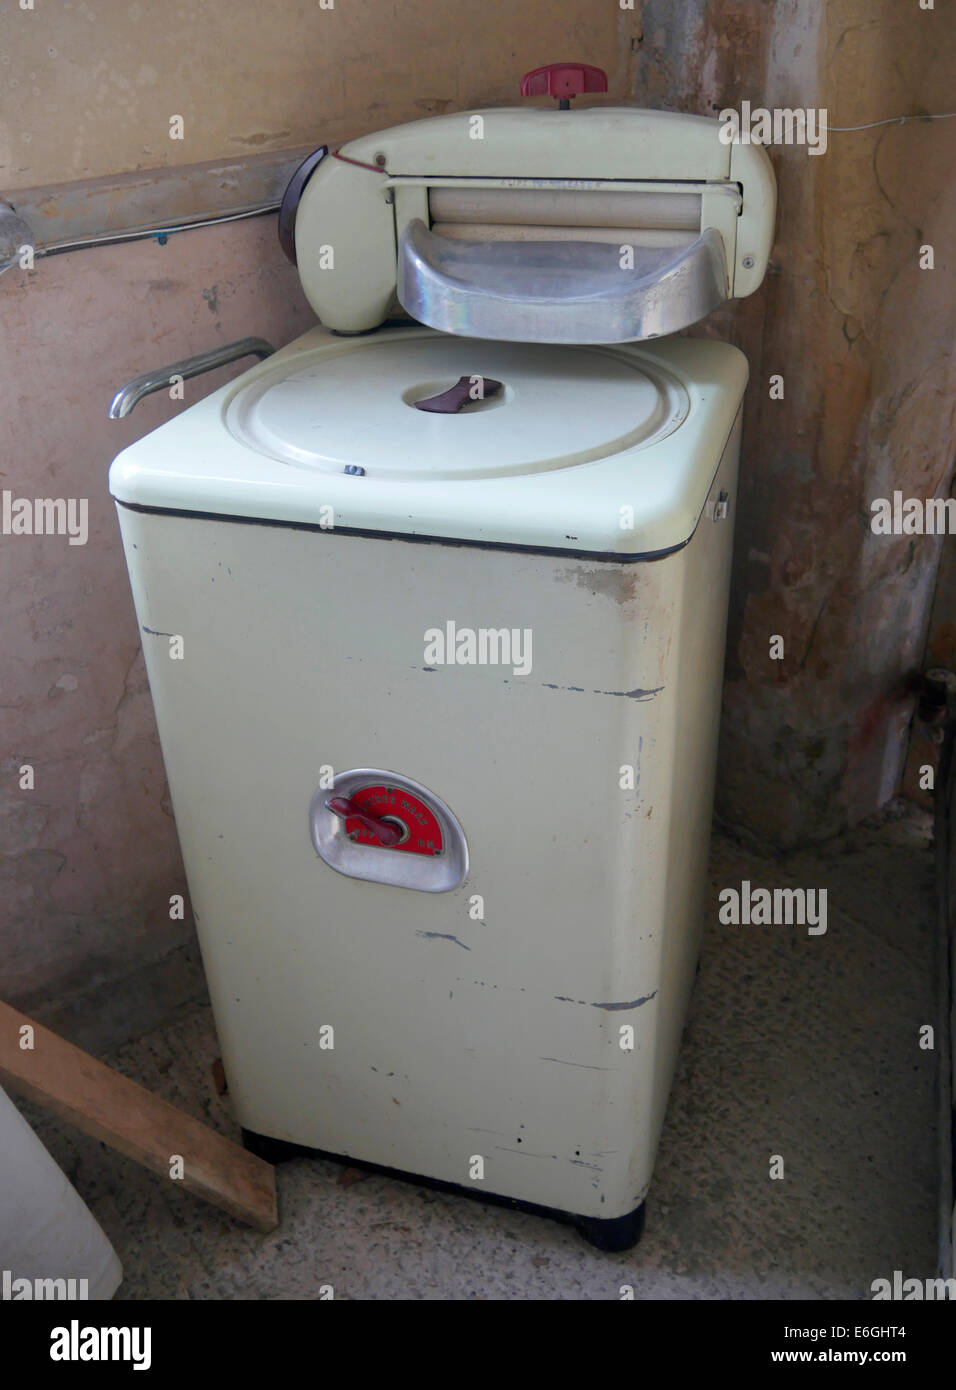 Very old english washing machine Stock Photo